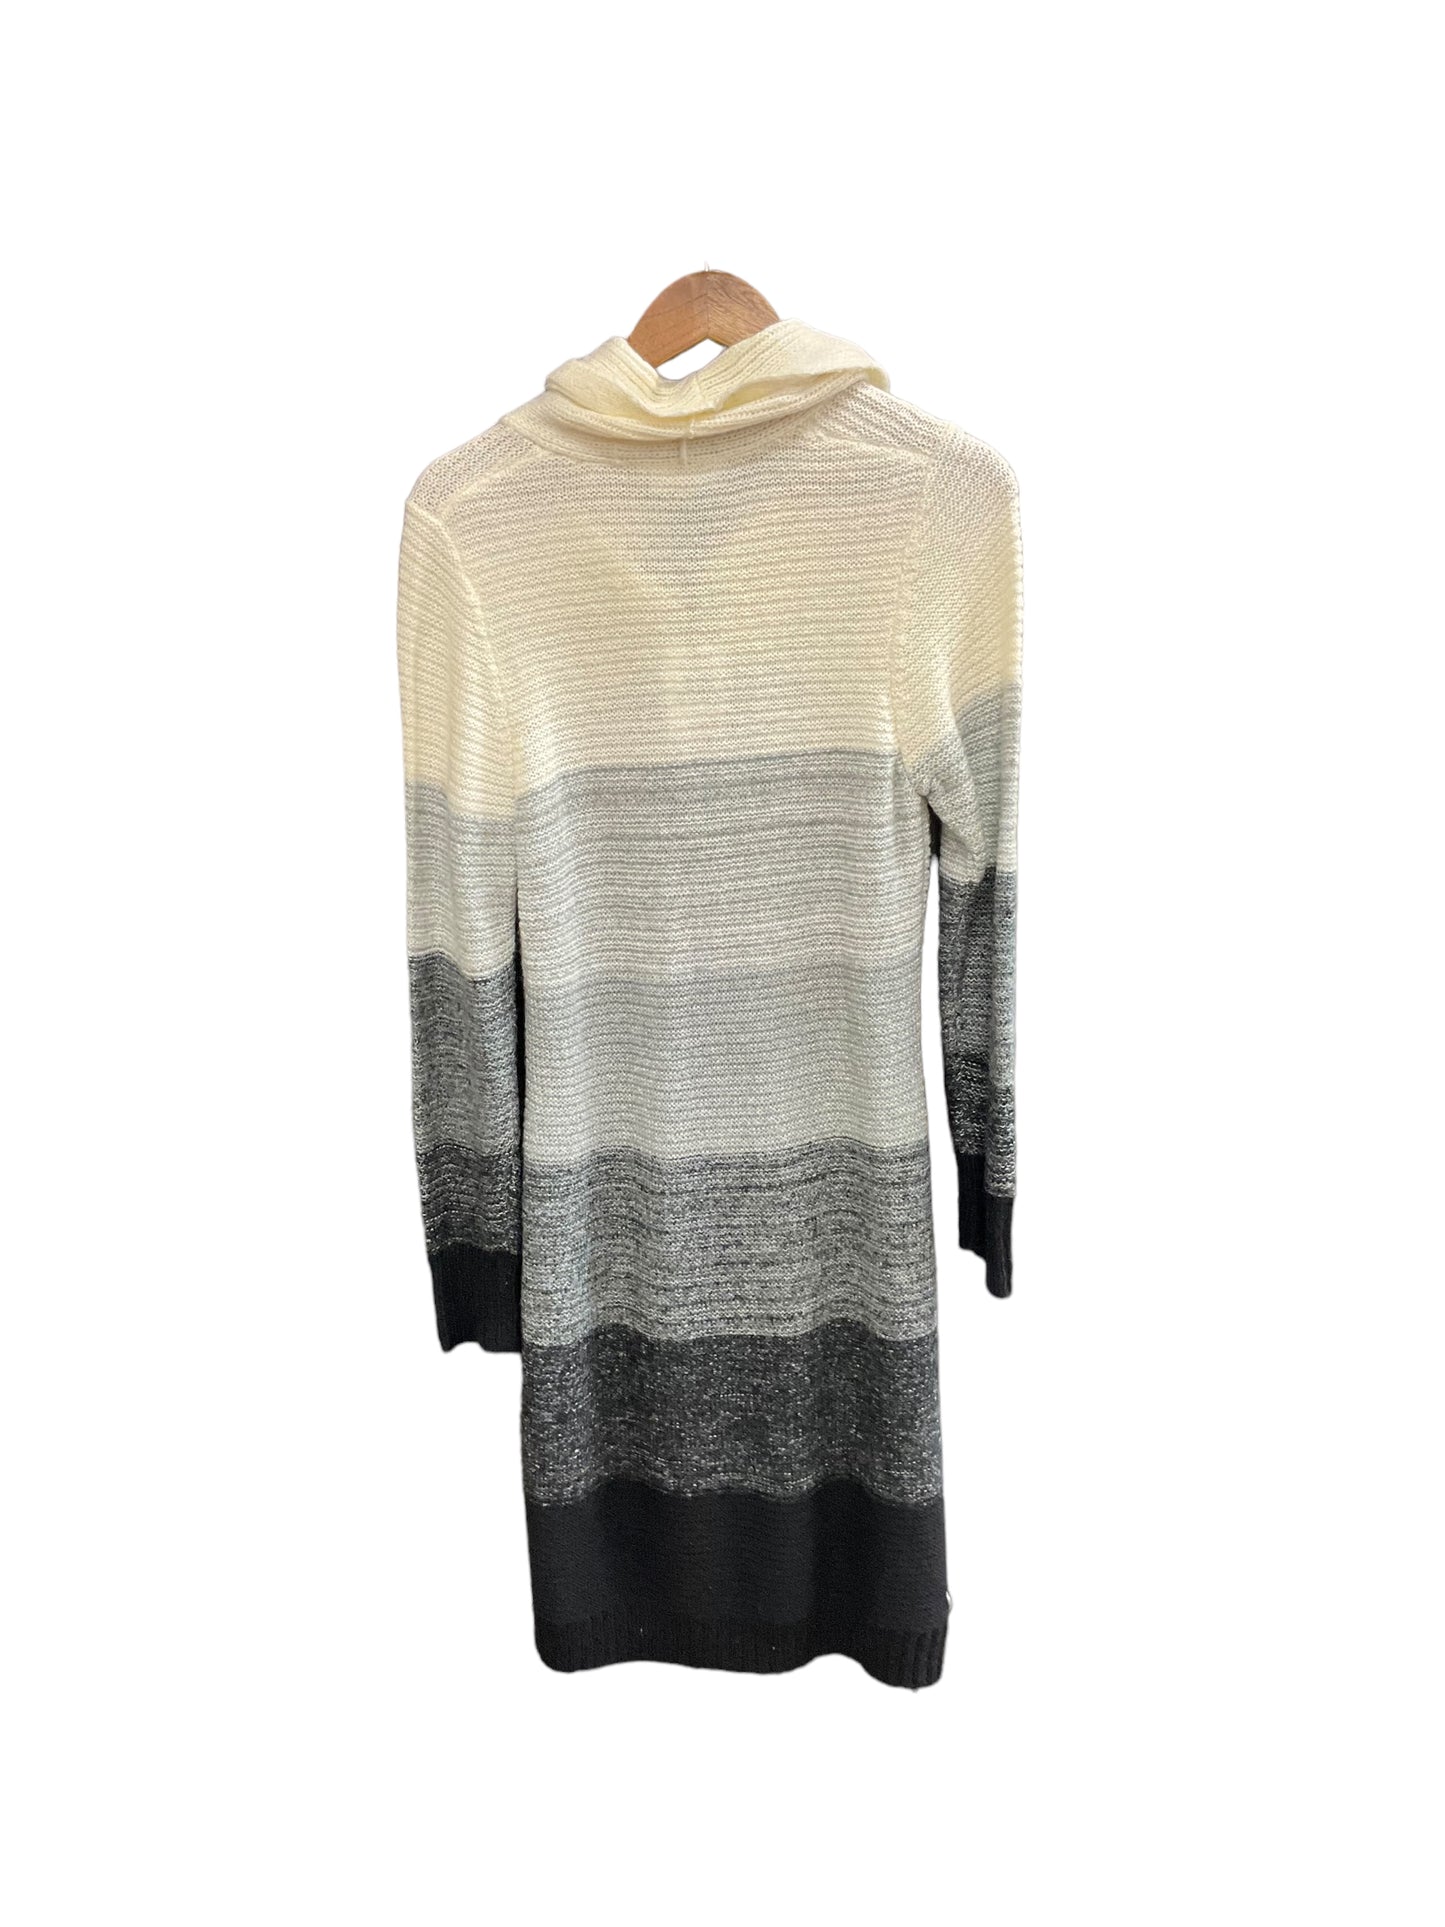 Dress Sweater By Calvin Klein  Size: L